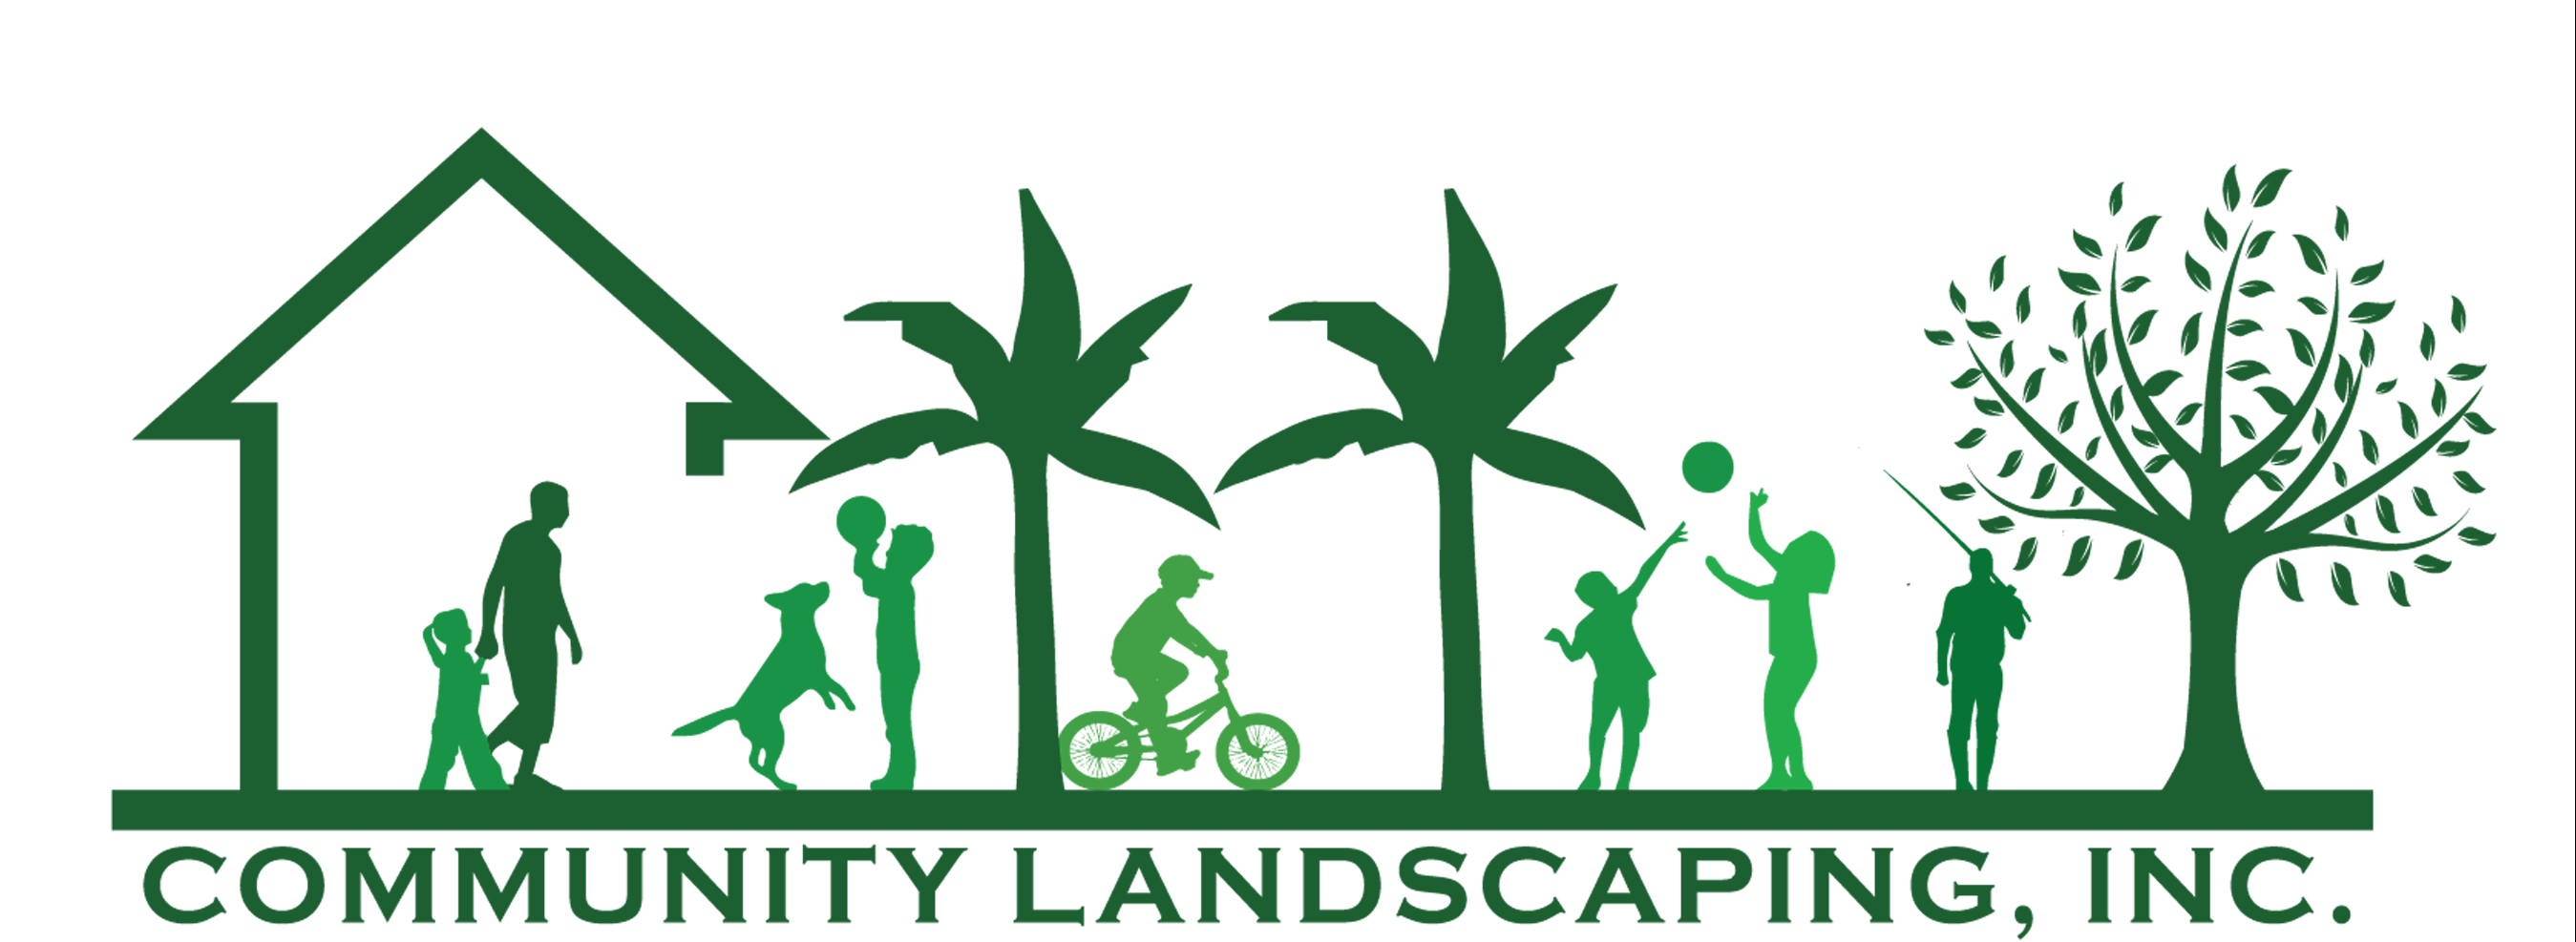 Community Landscaping, Inc. Logo